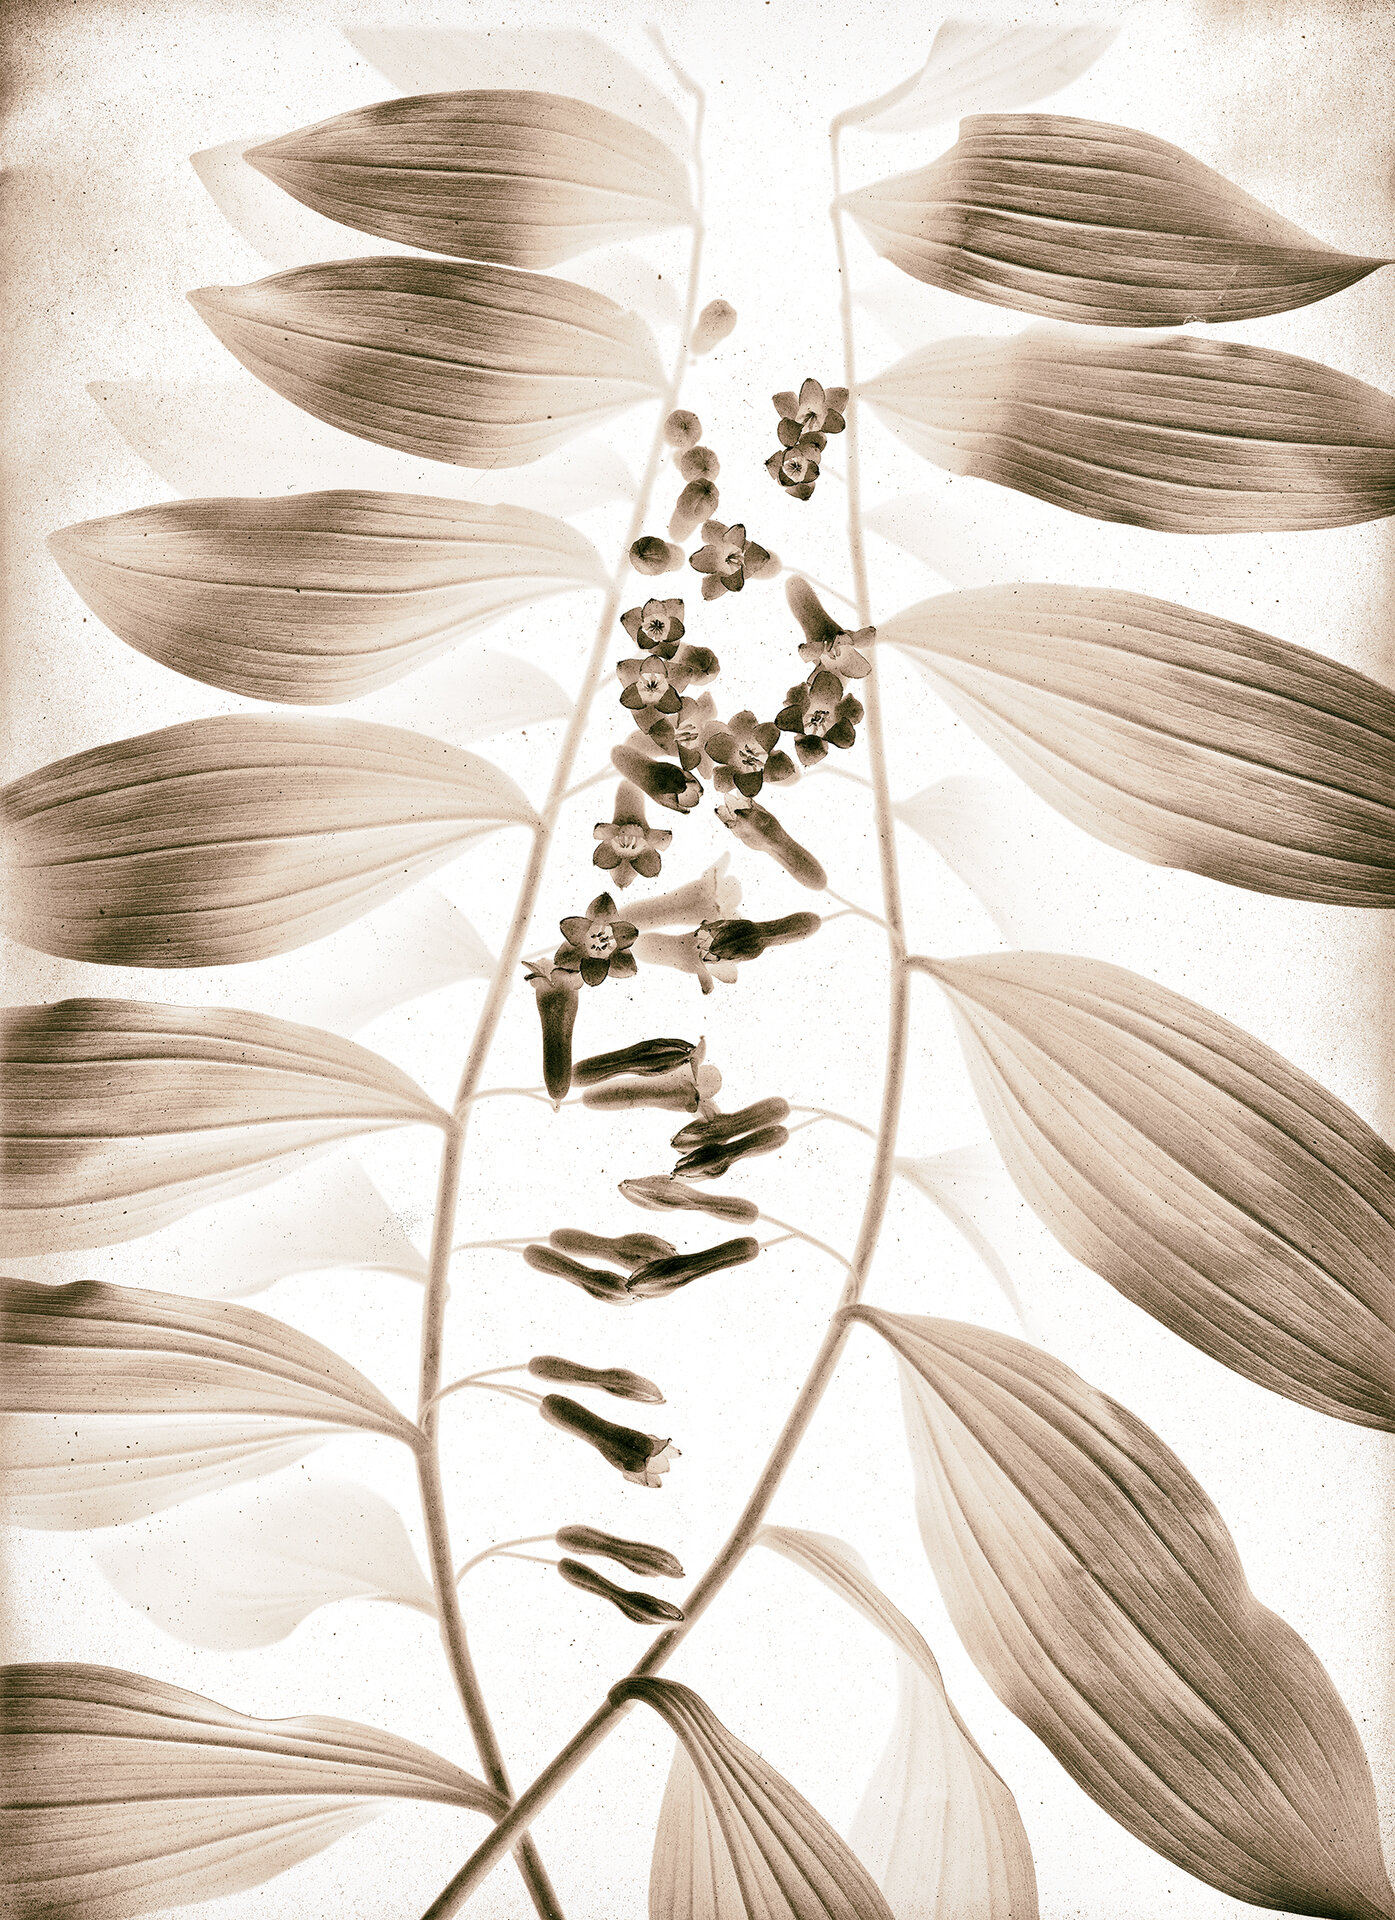   Solomon Seal in Flower , 2019  Archival pigment print  20" x 14.5" 